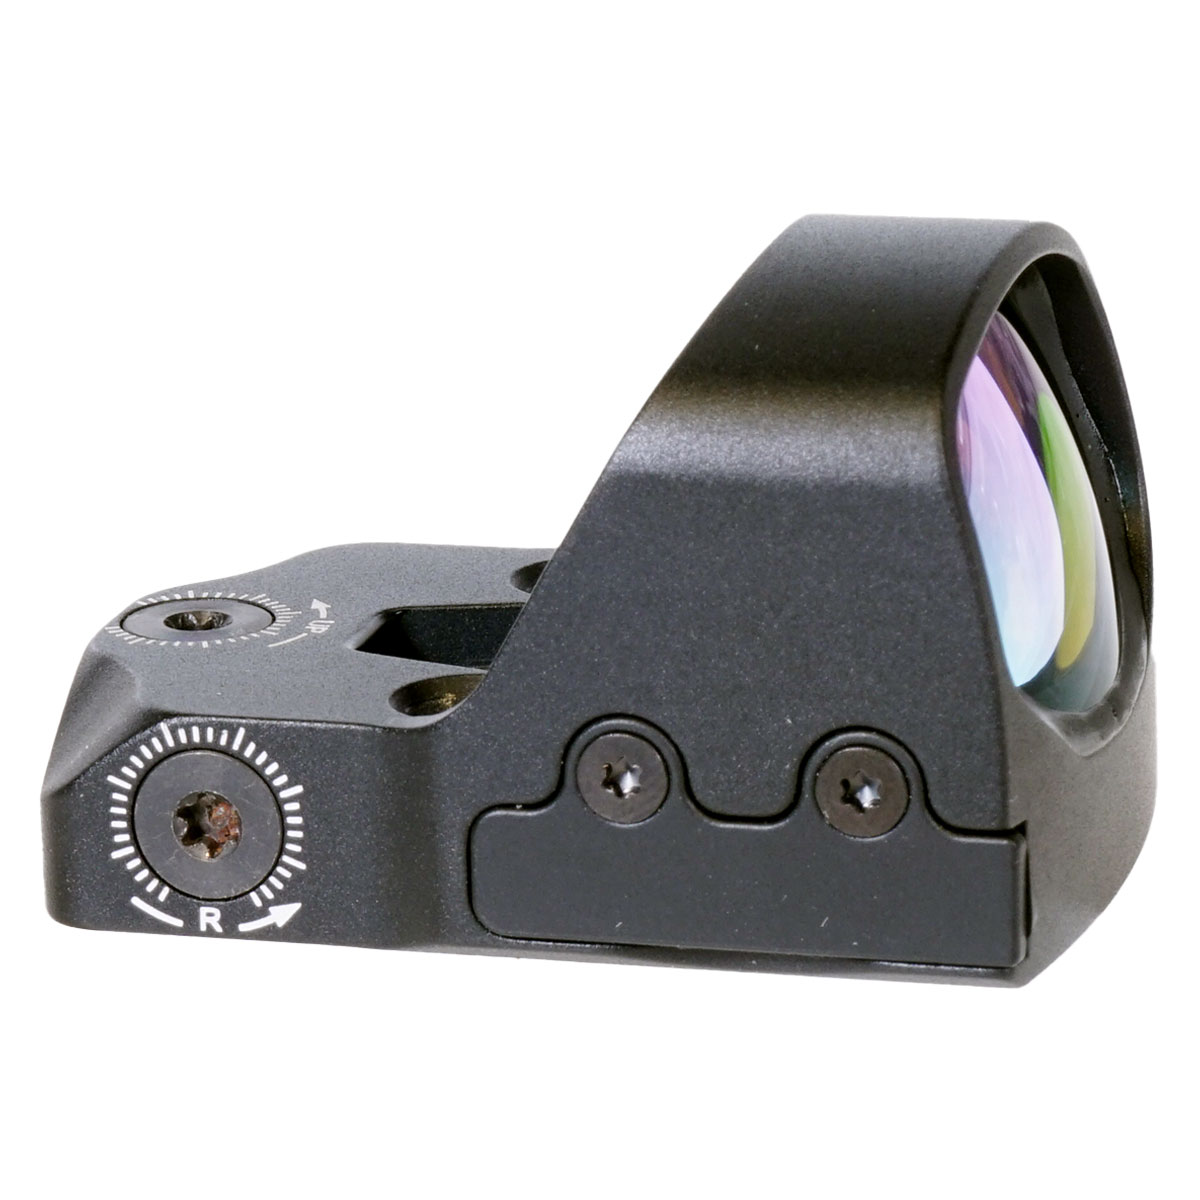 SHOTAC Heavy Duty RMR/Picatinny Micro Red Dot Sight - 50,000 Hour Battery Life